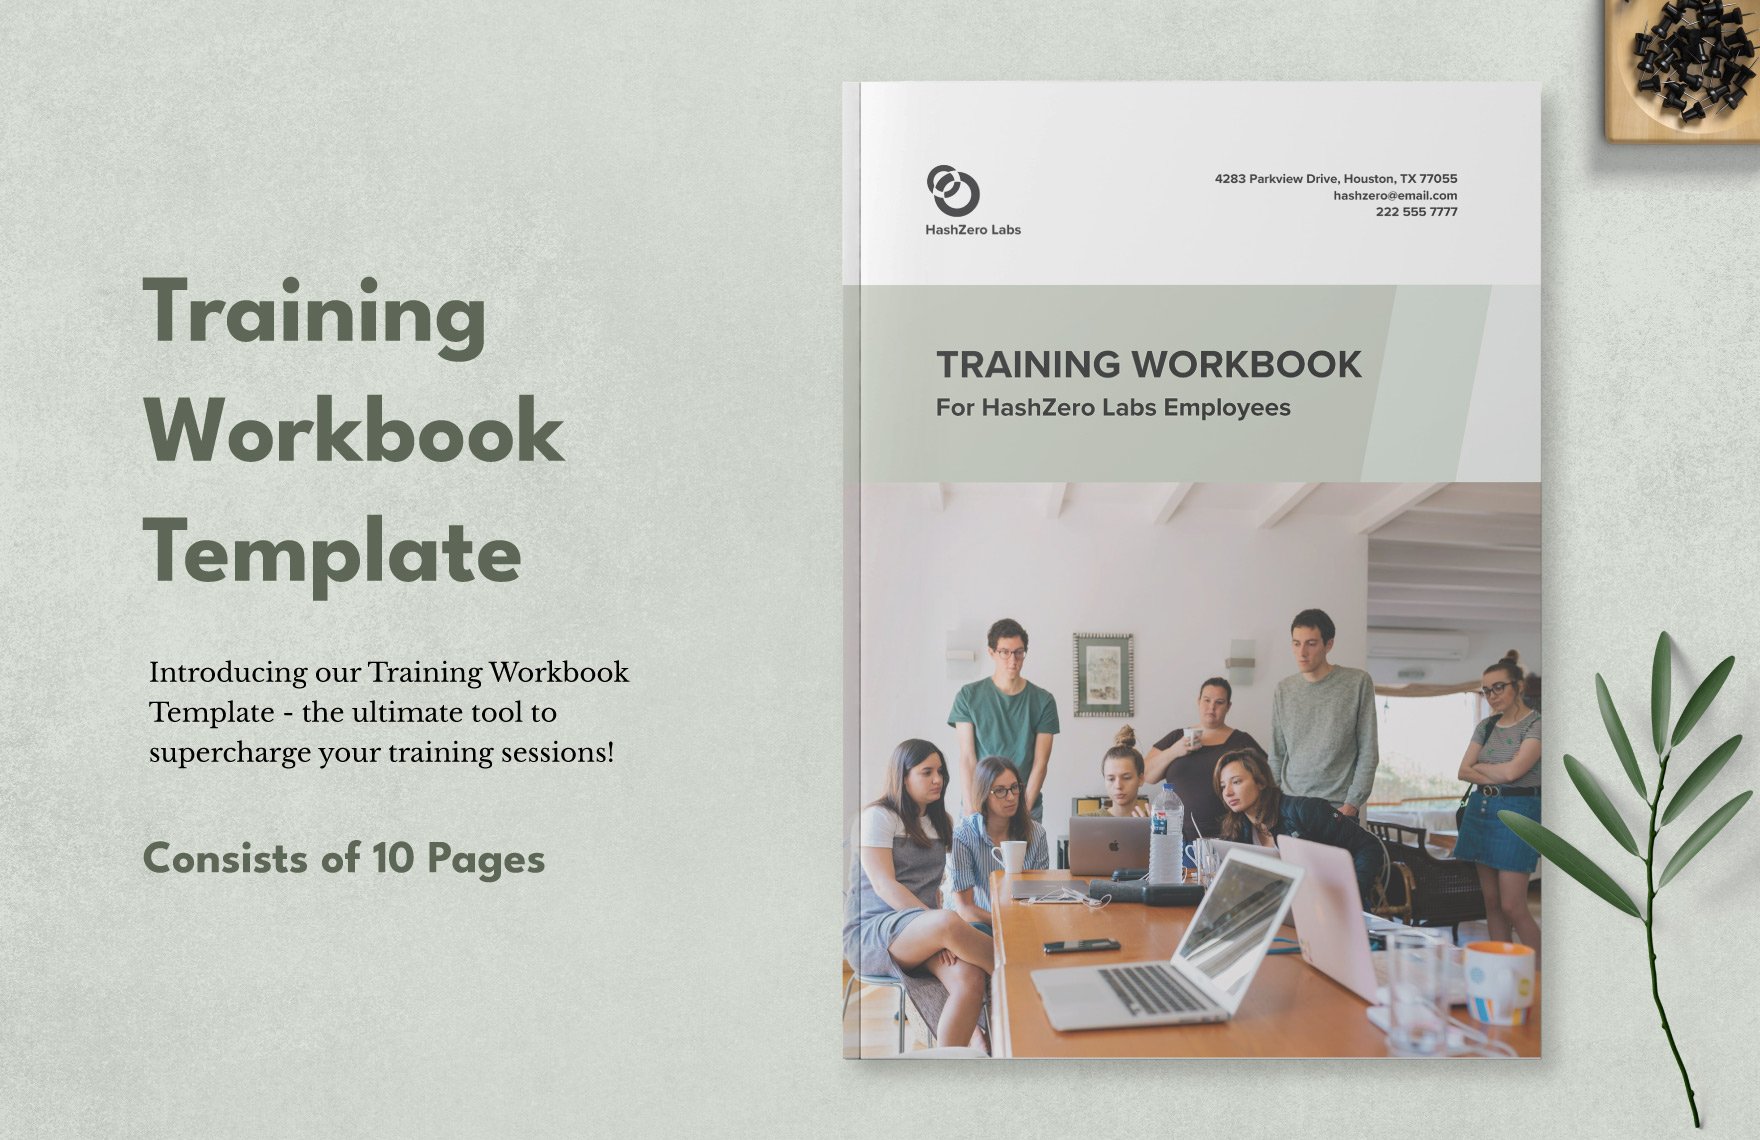 Training Workbook Template